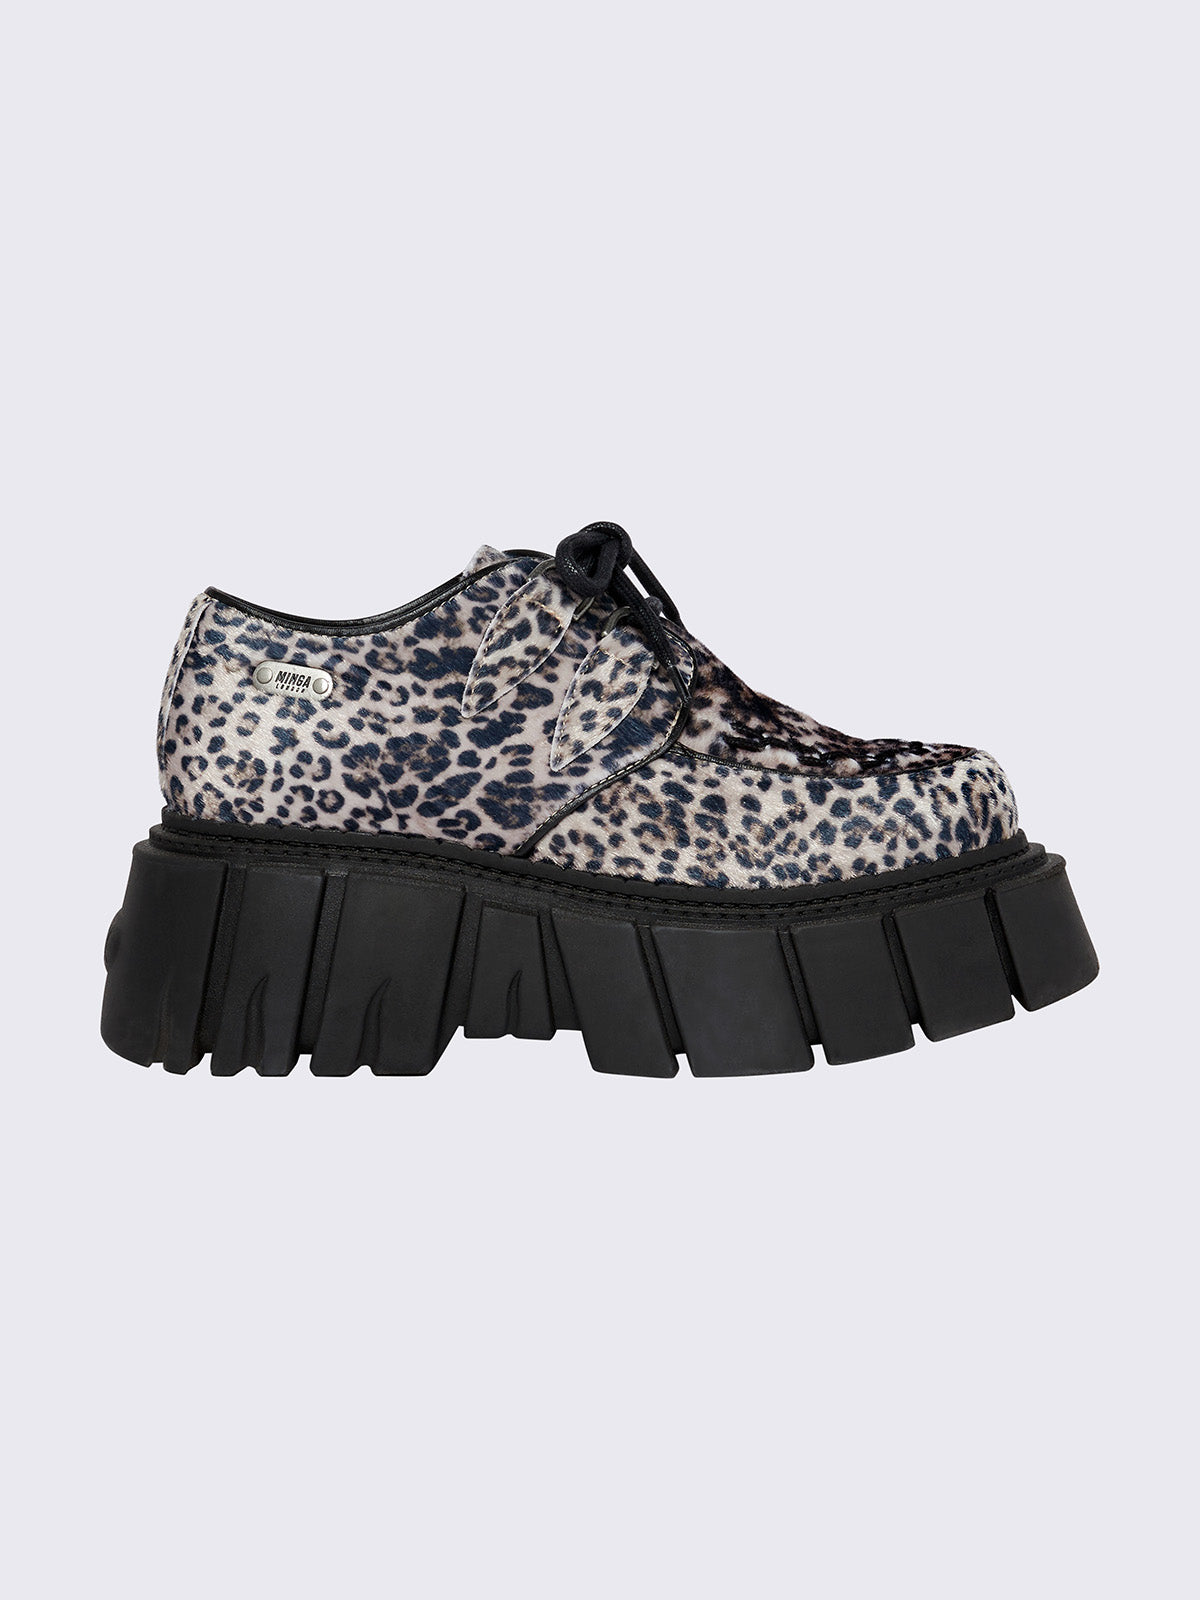 Chunky creeper platform shoe in leopard print